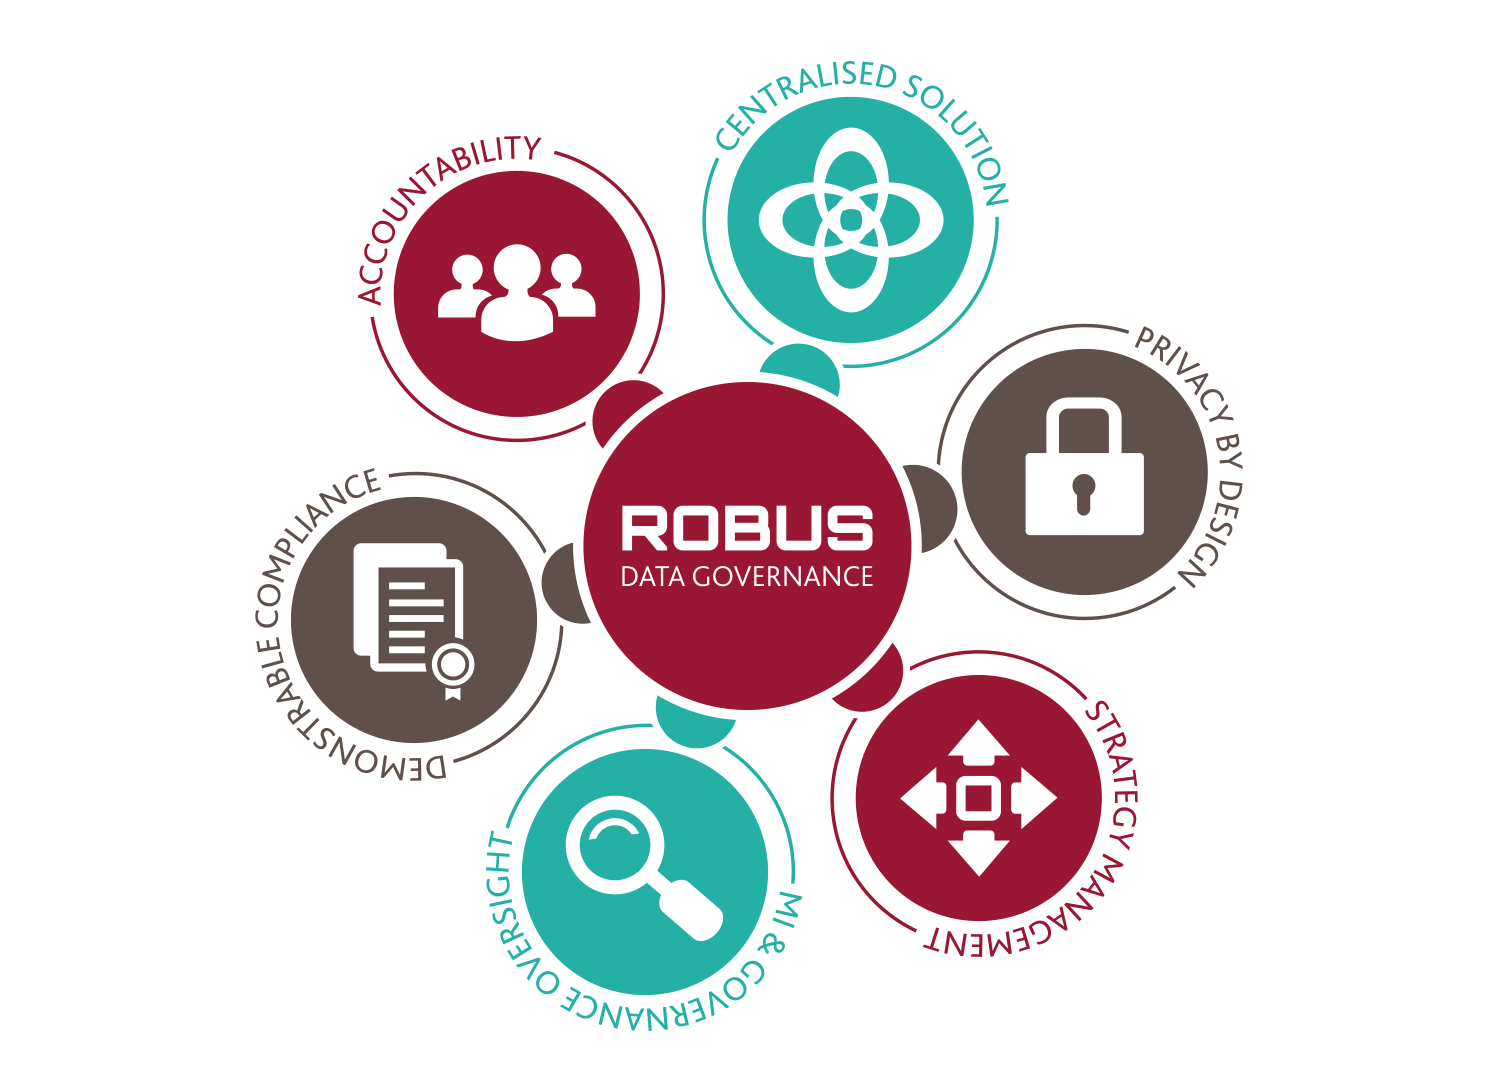 ROBUS - Data Governance Diagram showing solution USPs